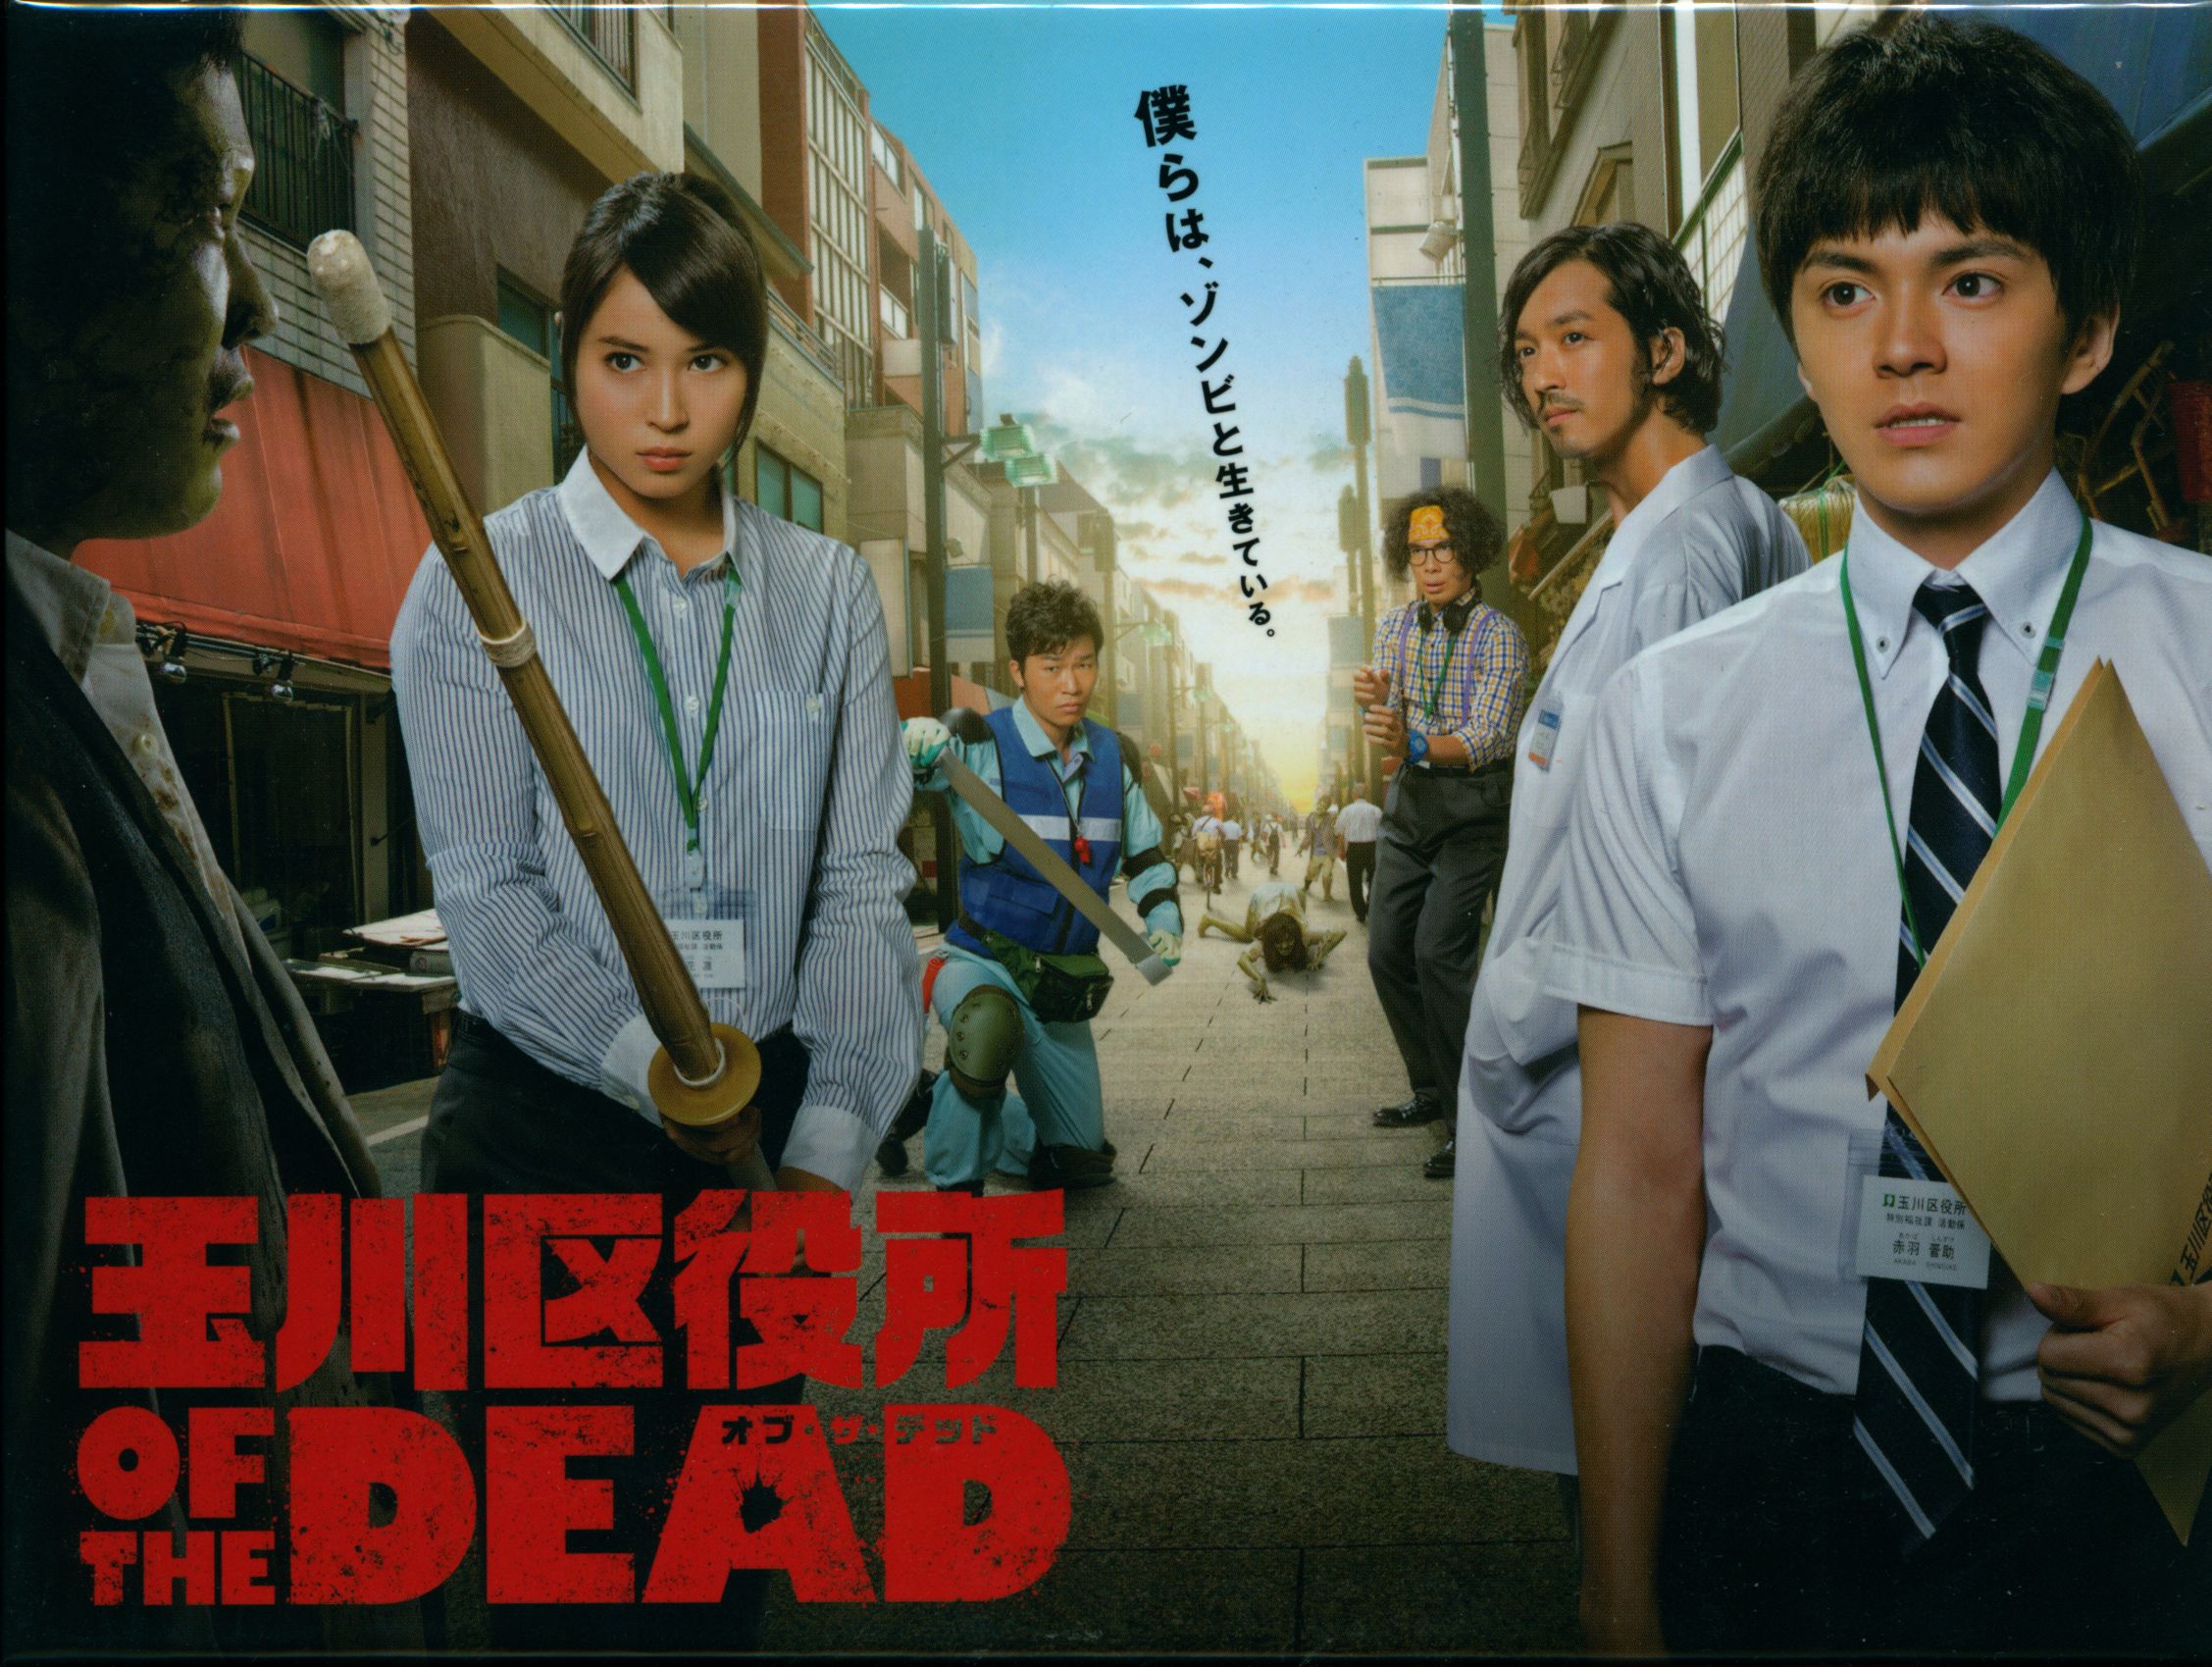 玉川区役所 OF THE DEAD DVD BOX-